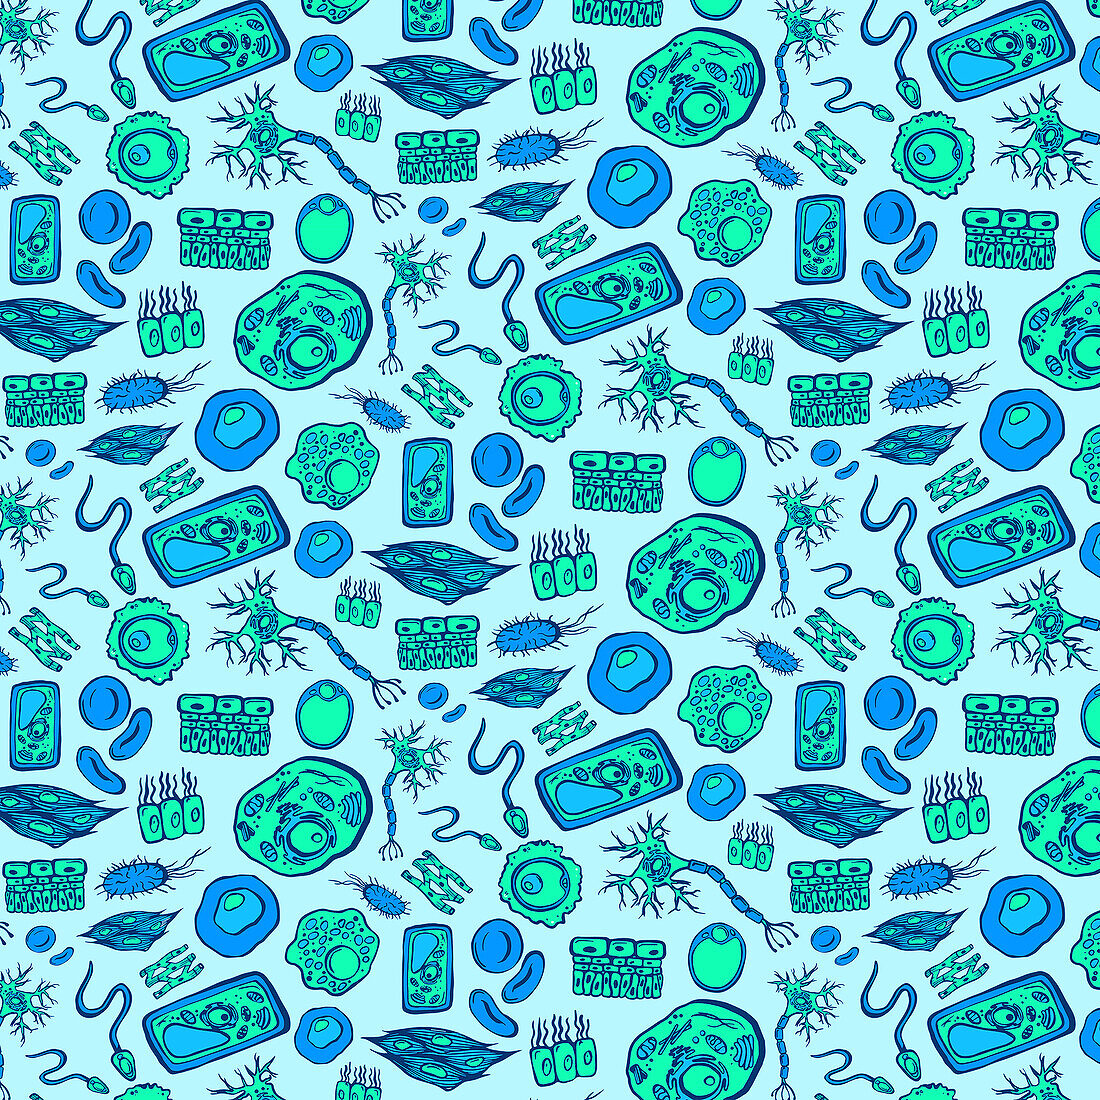 Cells, conceptual illustration